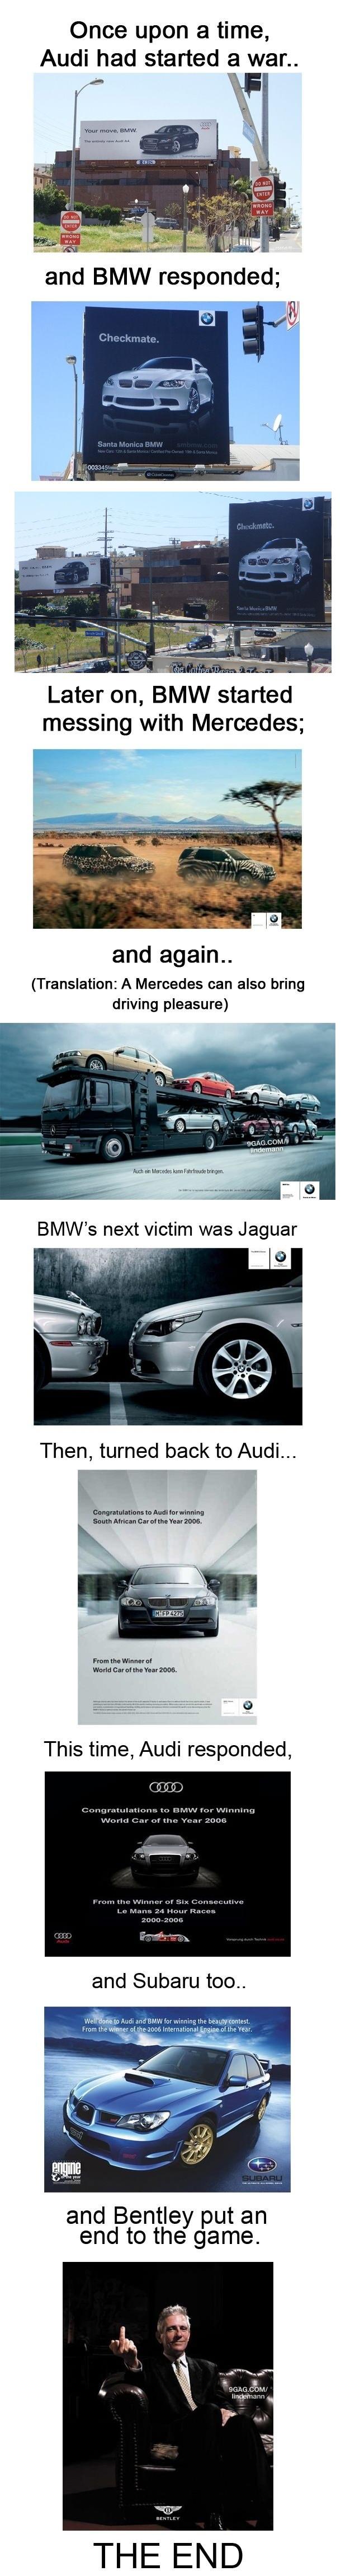 Audi-started-an-ad-war-BMW-took-it-everywhere.jpg